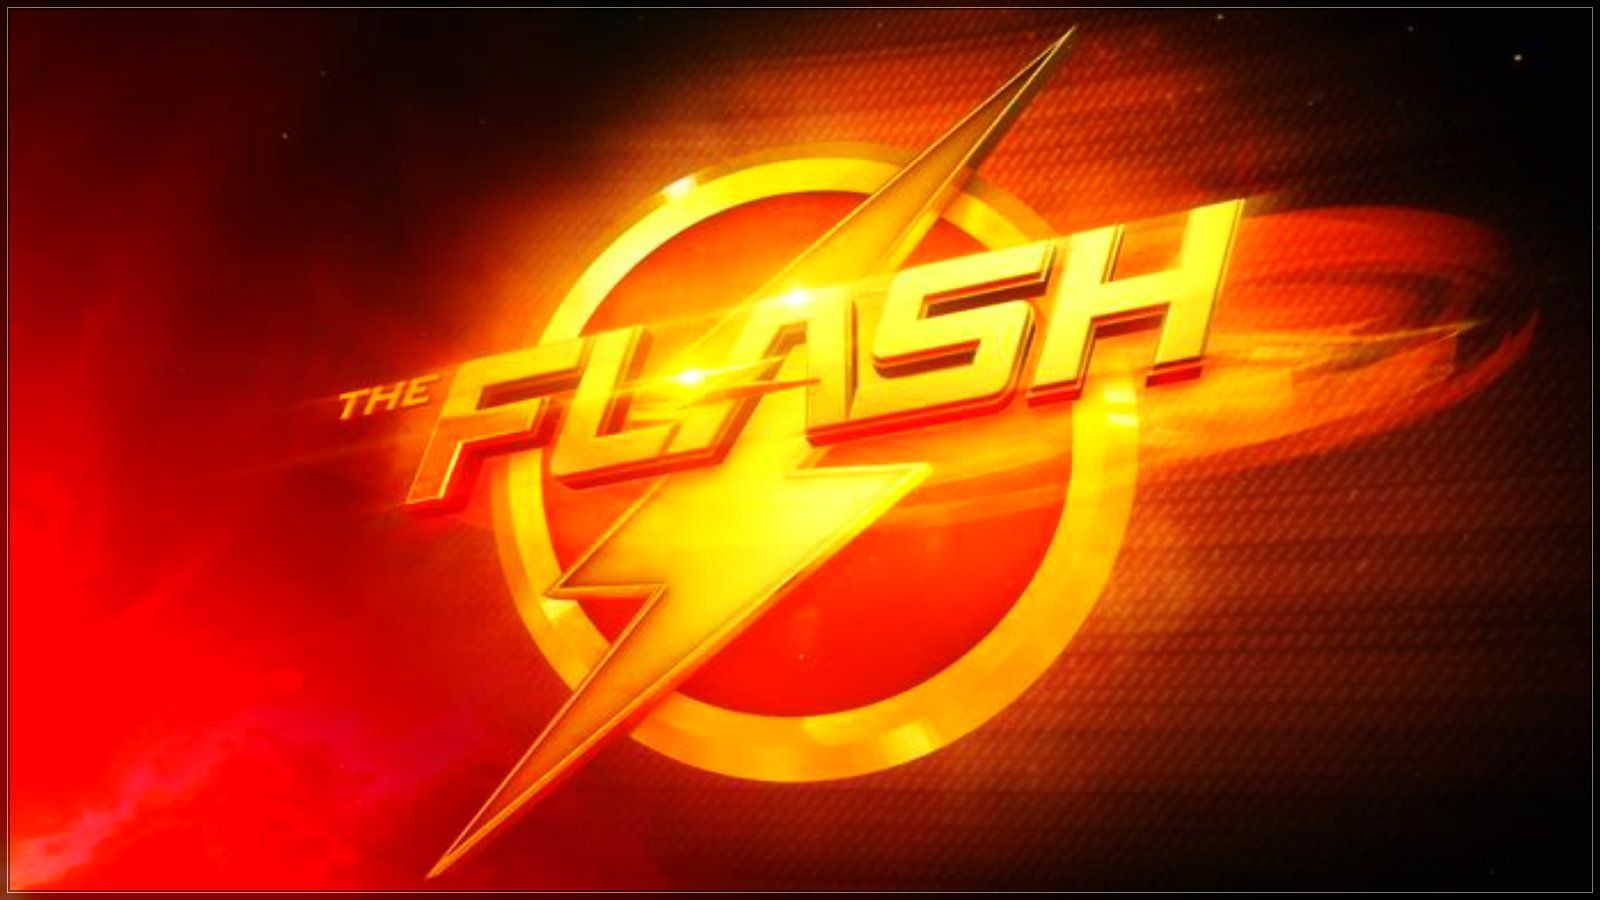 The Flash - The Flash CW Wallpaper 37656143 - Fanpop